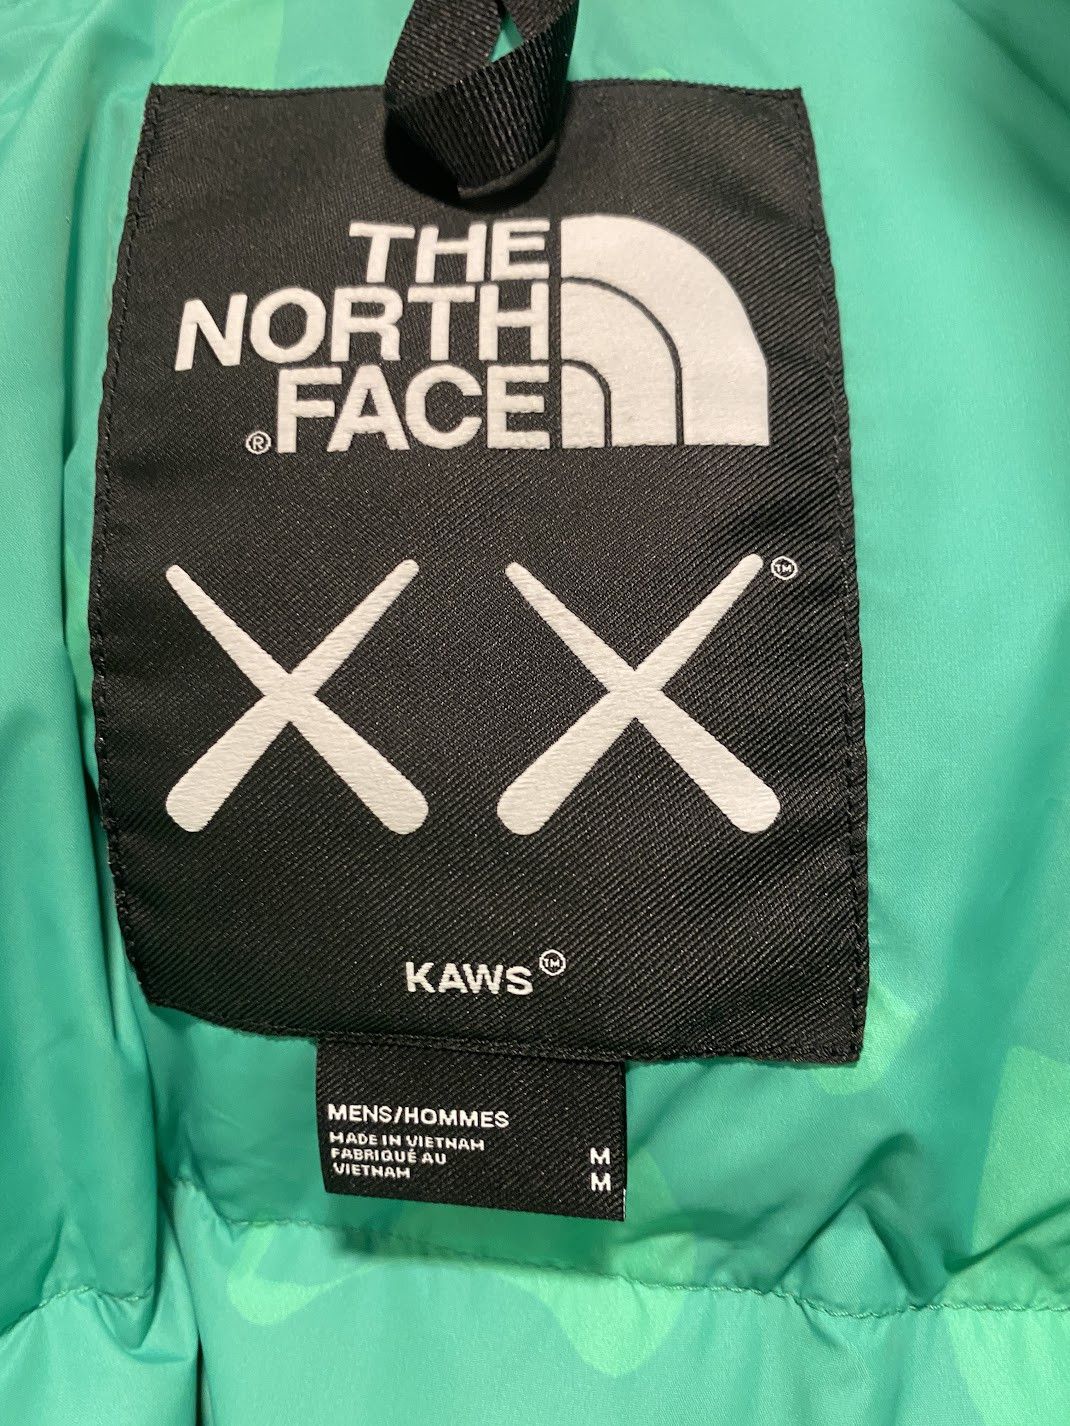 The North Face Retro 1996 Nuptse Jacket Safety Green Nuptse Print Size US M / EU 48-50 / 2 - 9 Thumbnail